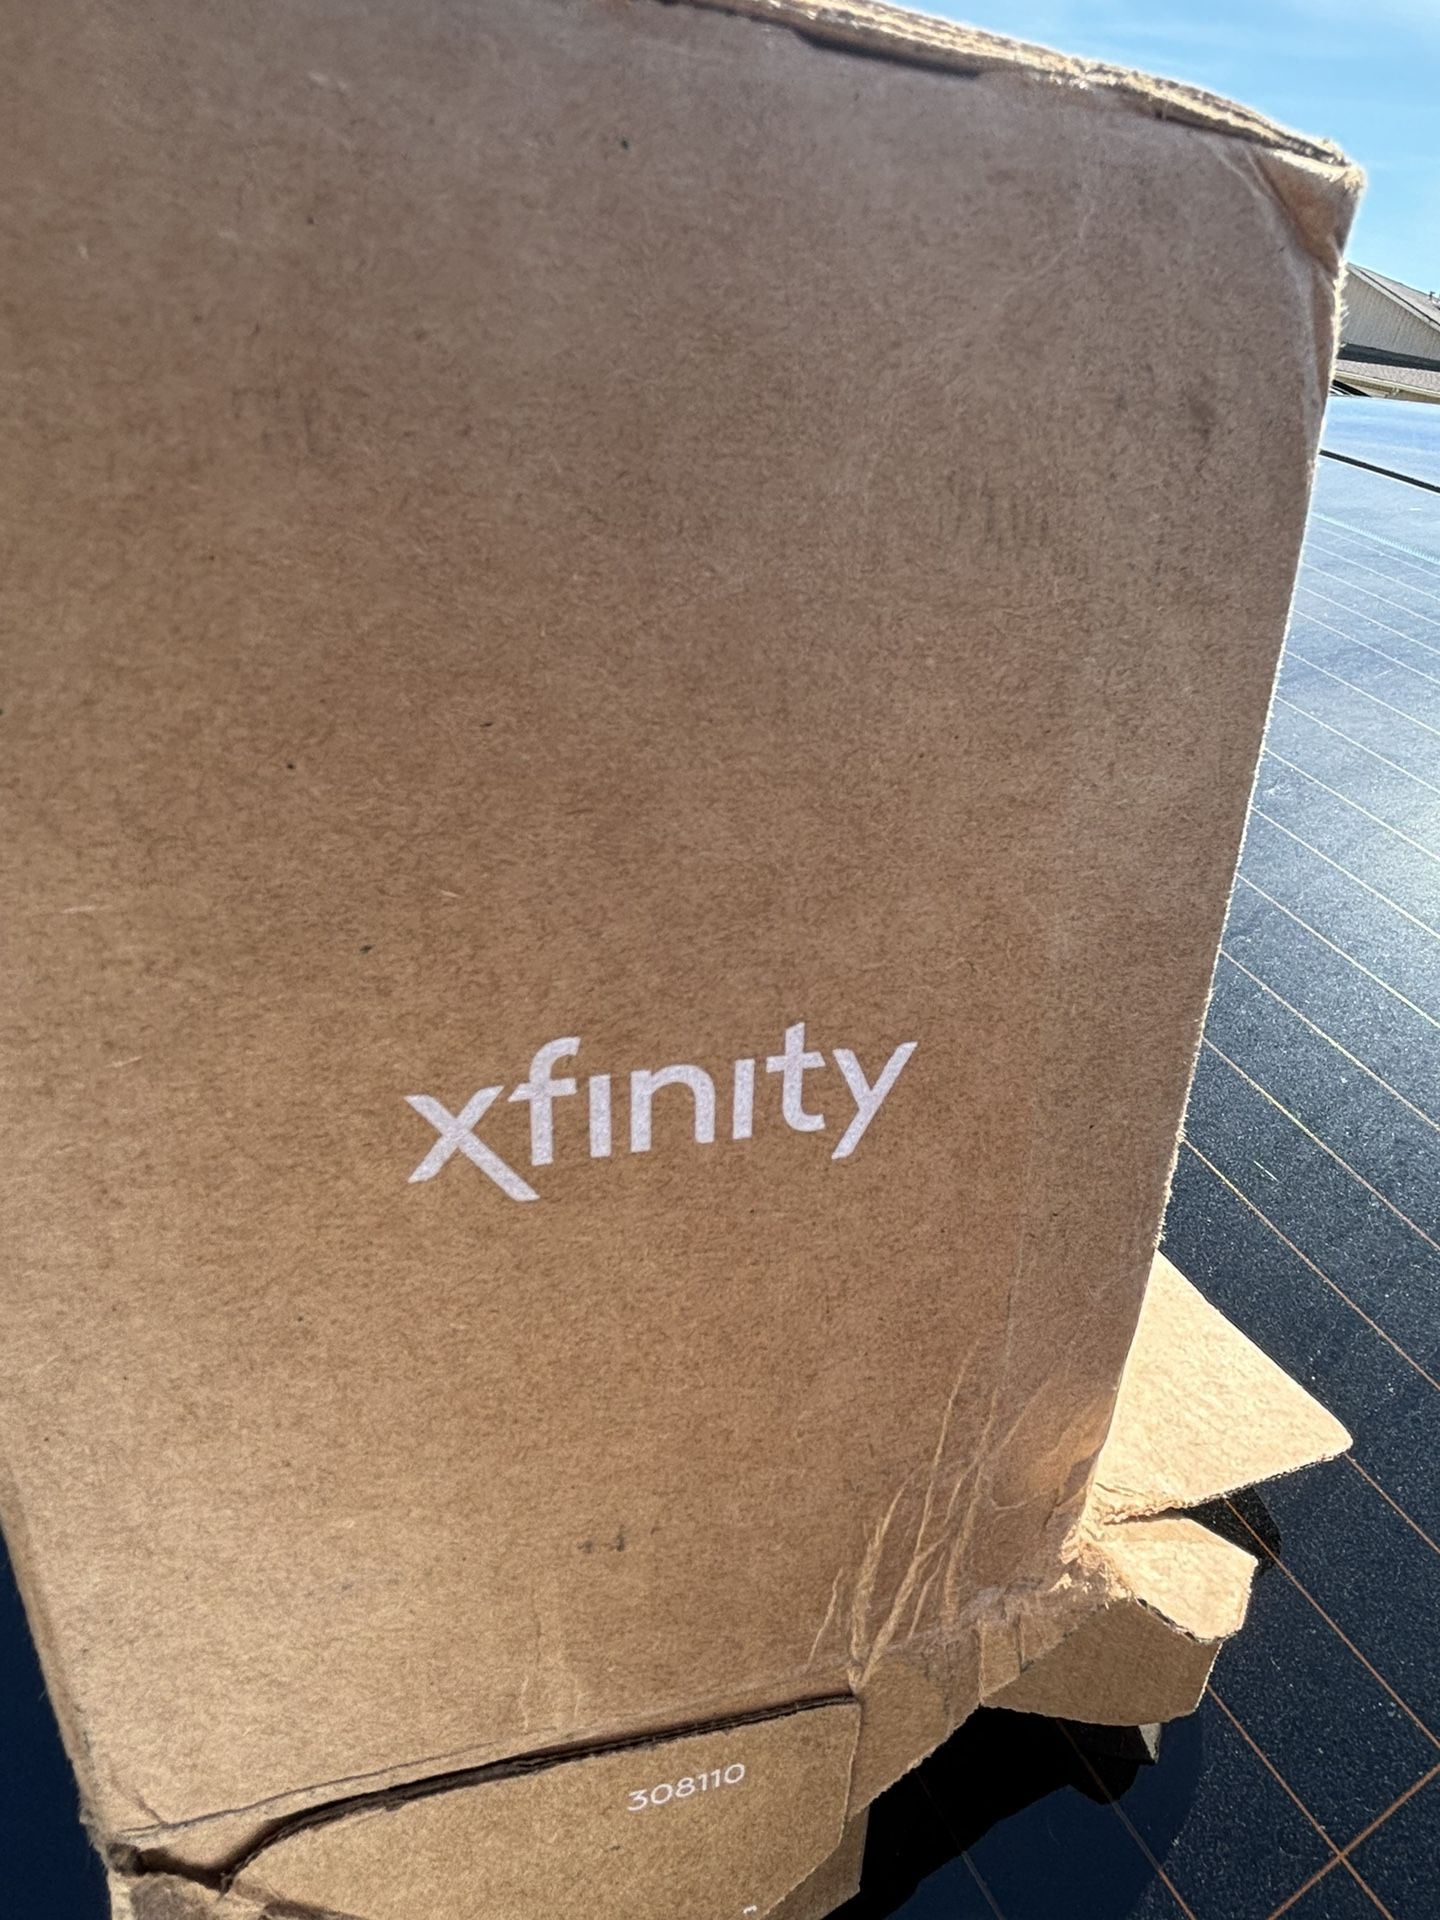 Xfinity Wi-fi Router